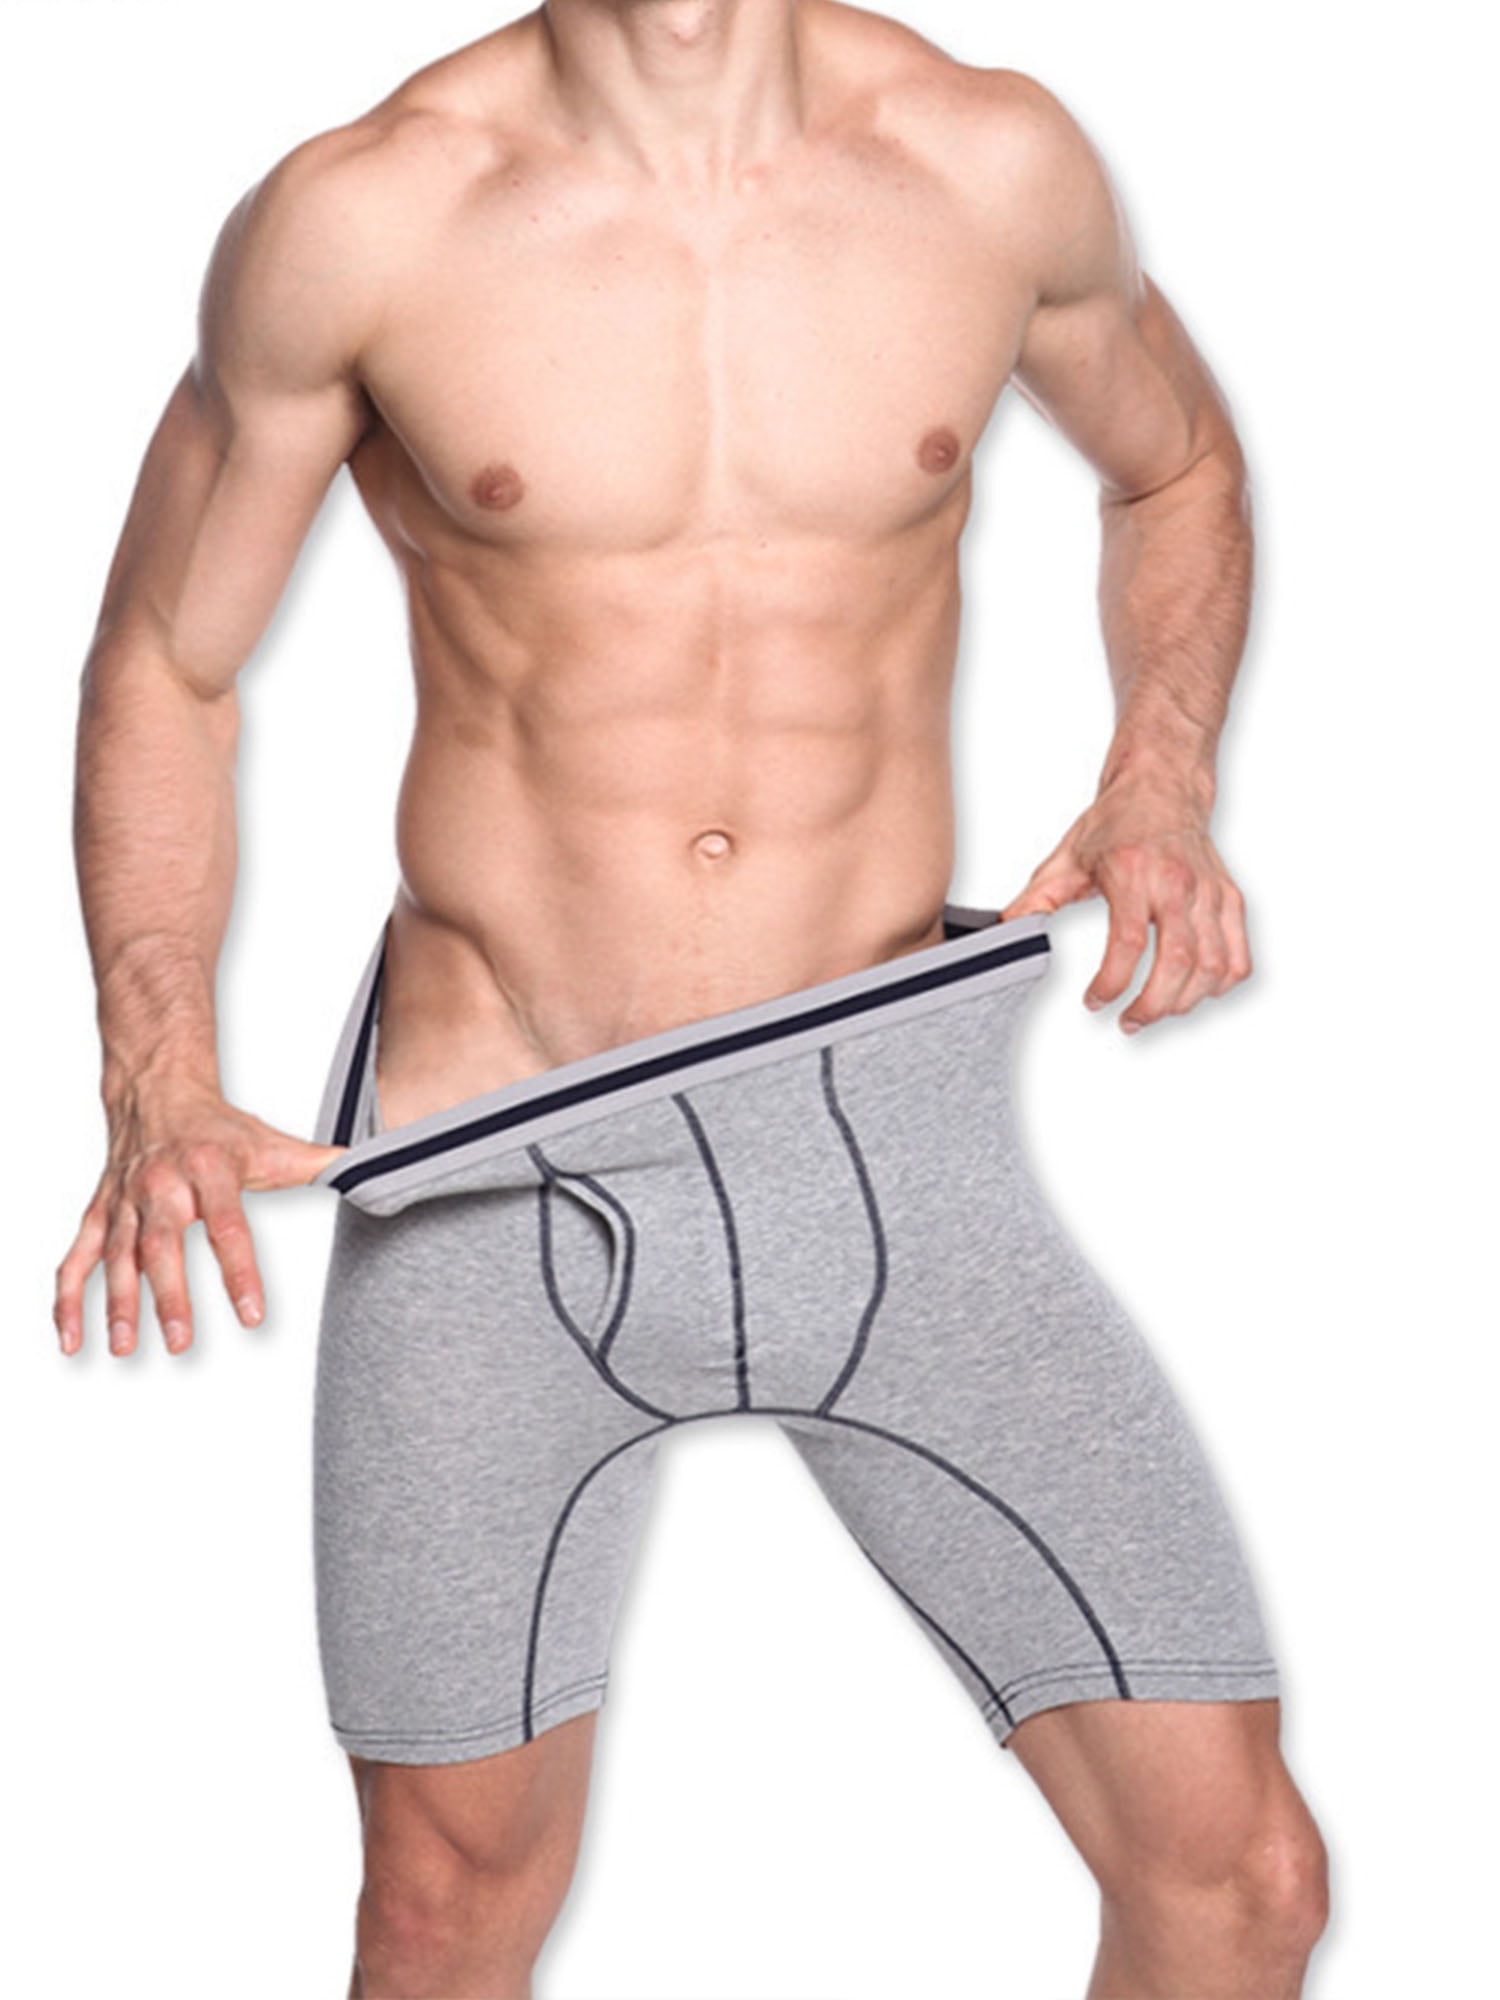 OCEAN-STORE Mens Underwear Boxer Briefs Cotton Long Leg Stretch Underwear Open-Fly Boxers for Men 